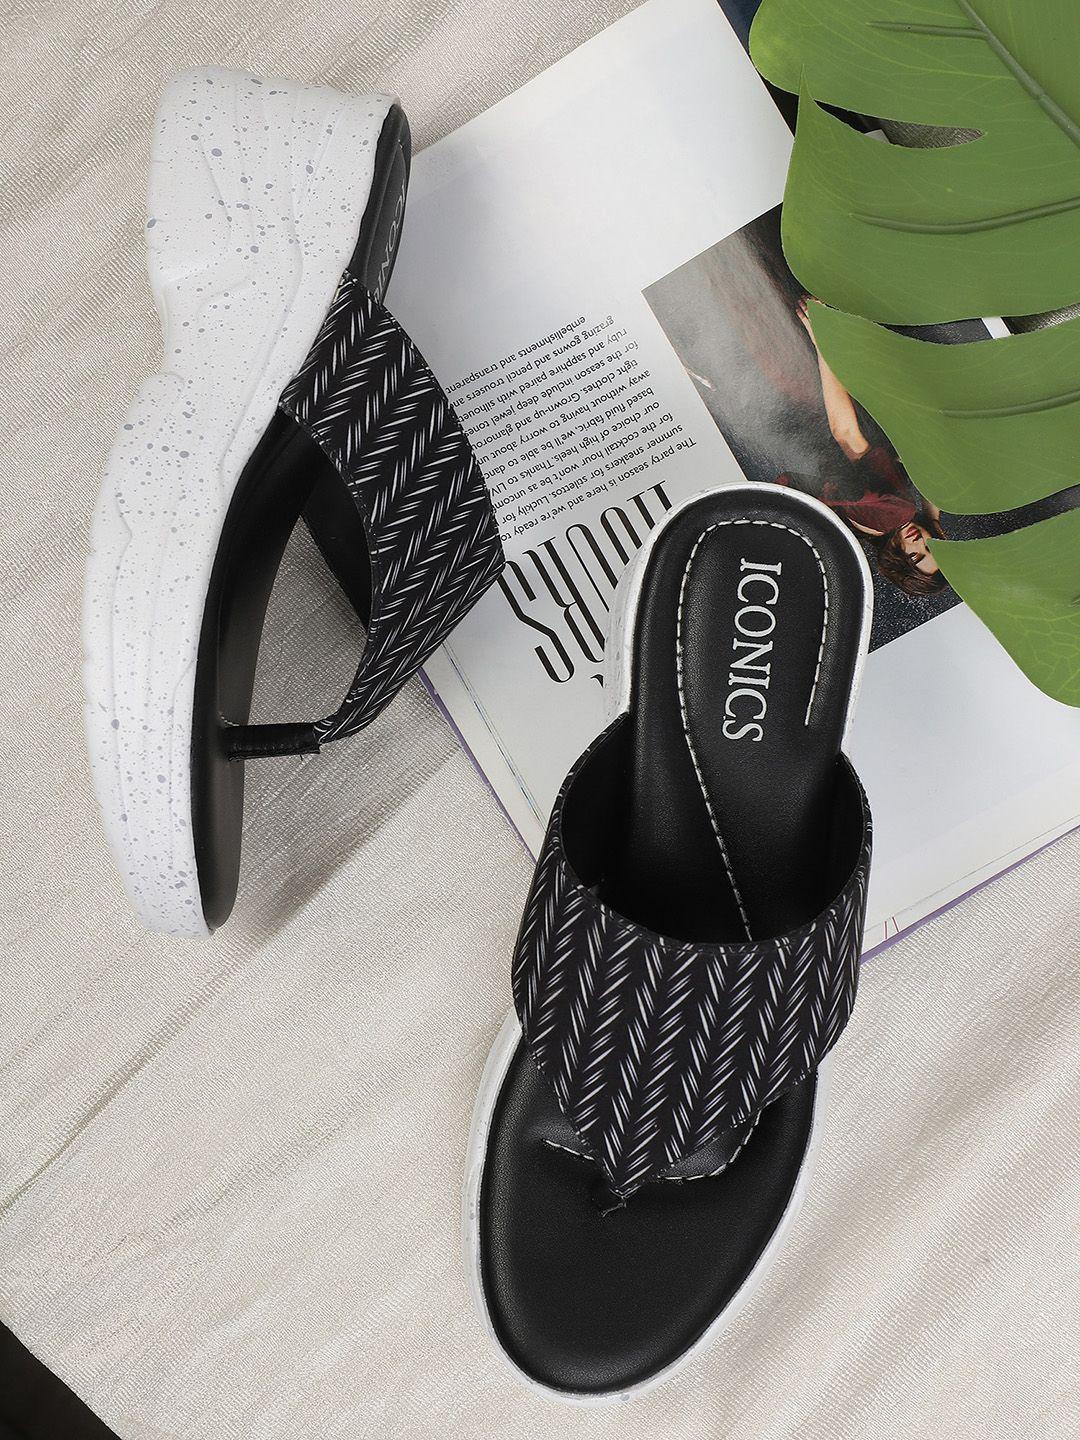 iconics-black-&-white-wedge-sandals